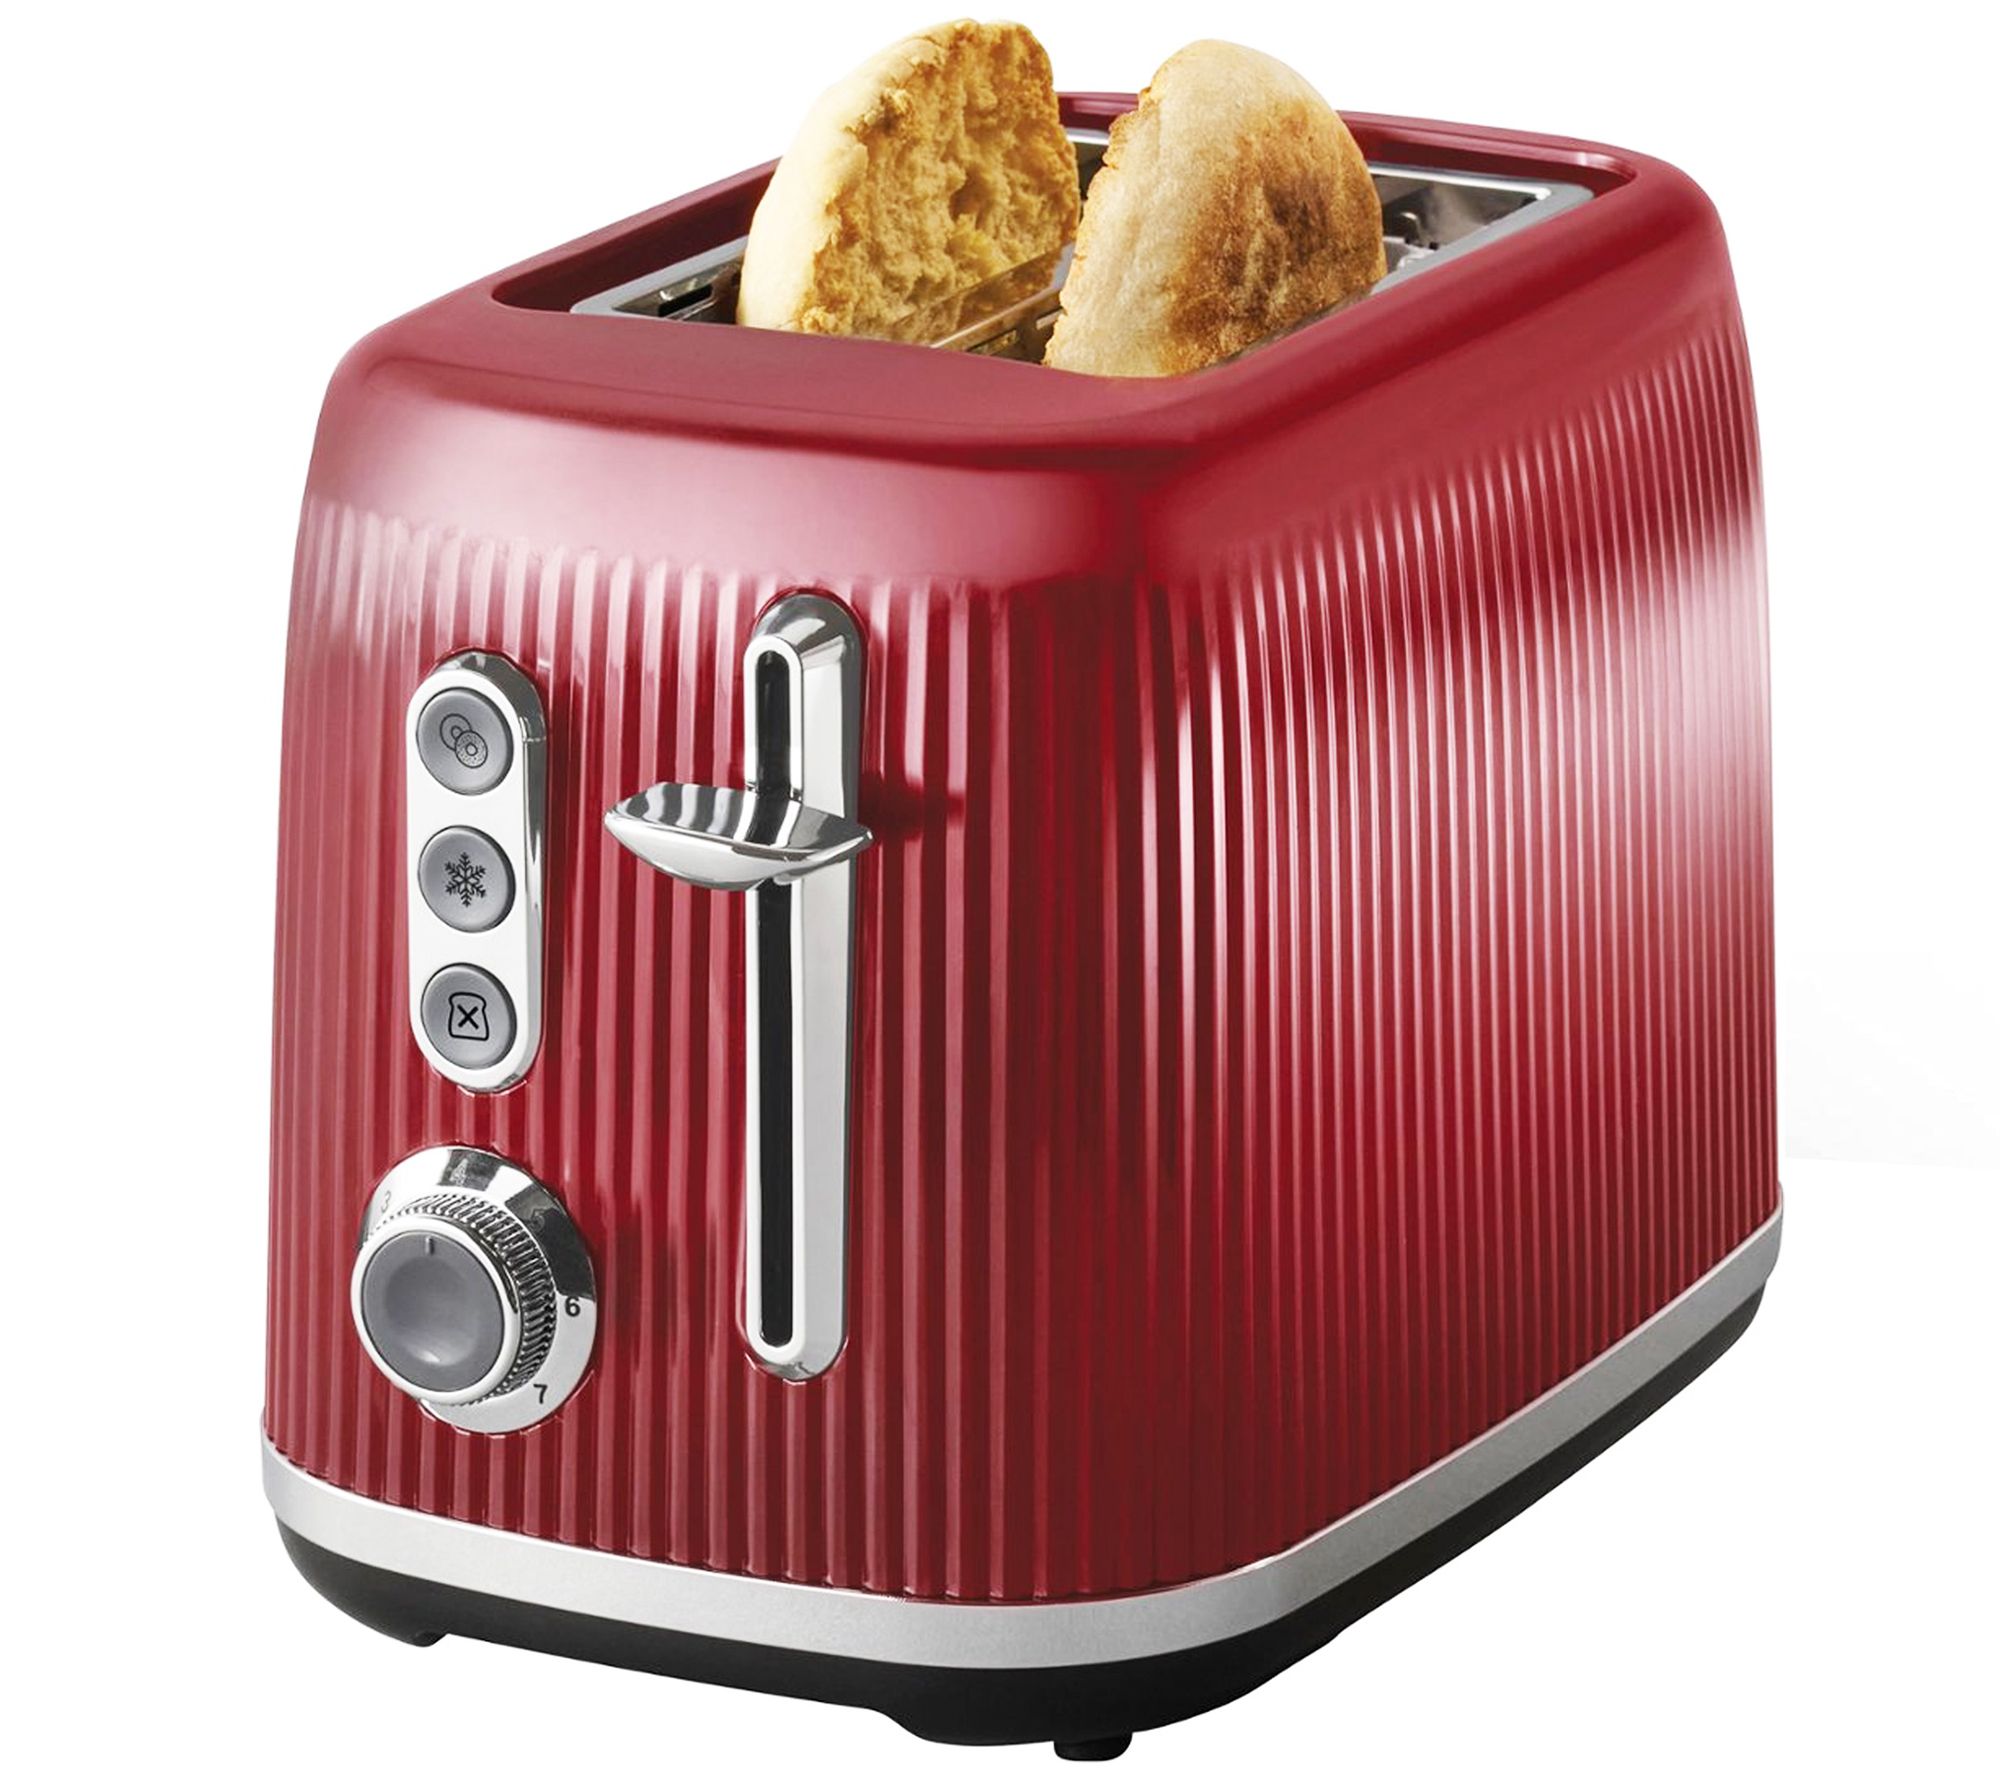 Retractable Cord Toaster